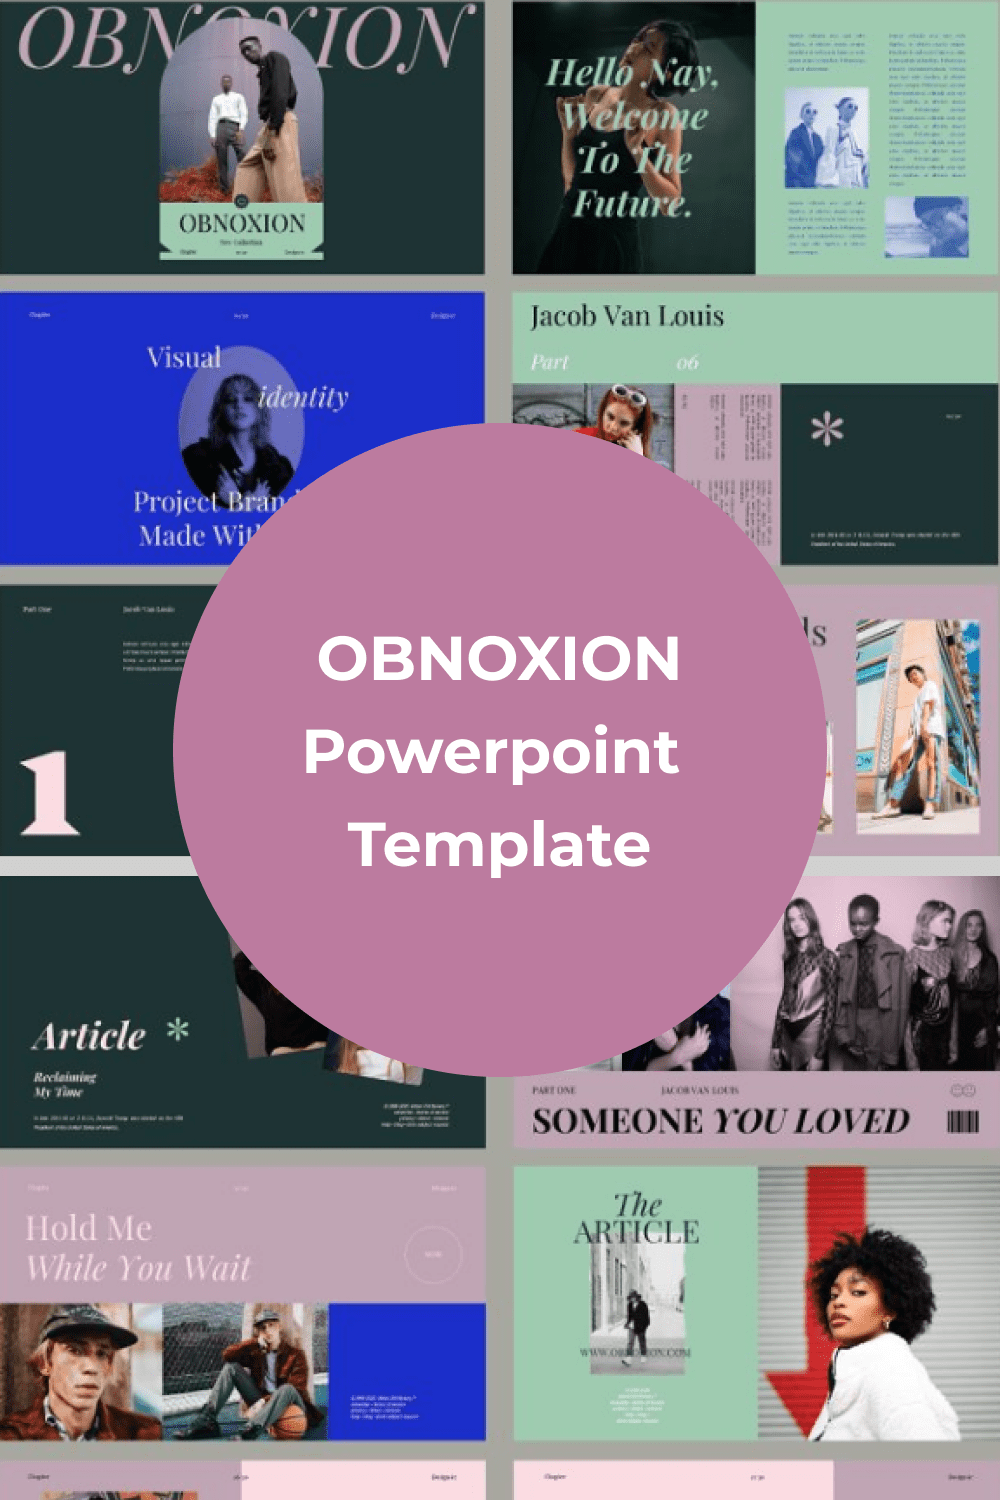 OBNOXION Powerpoint Template Pinterest.